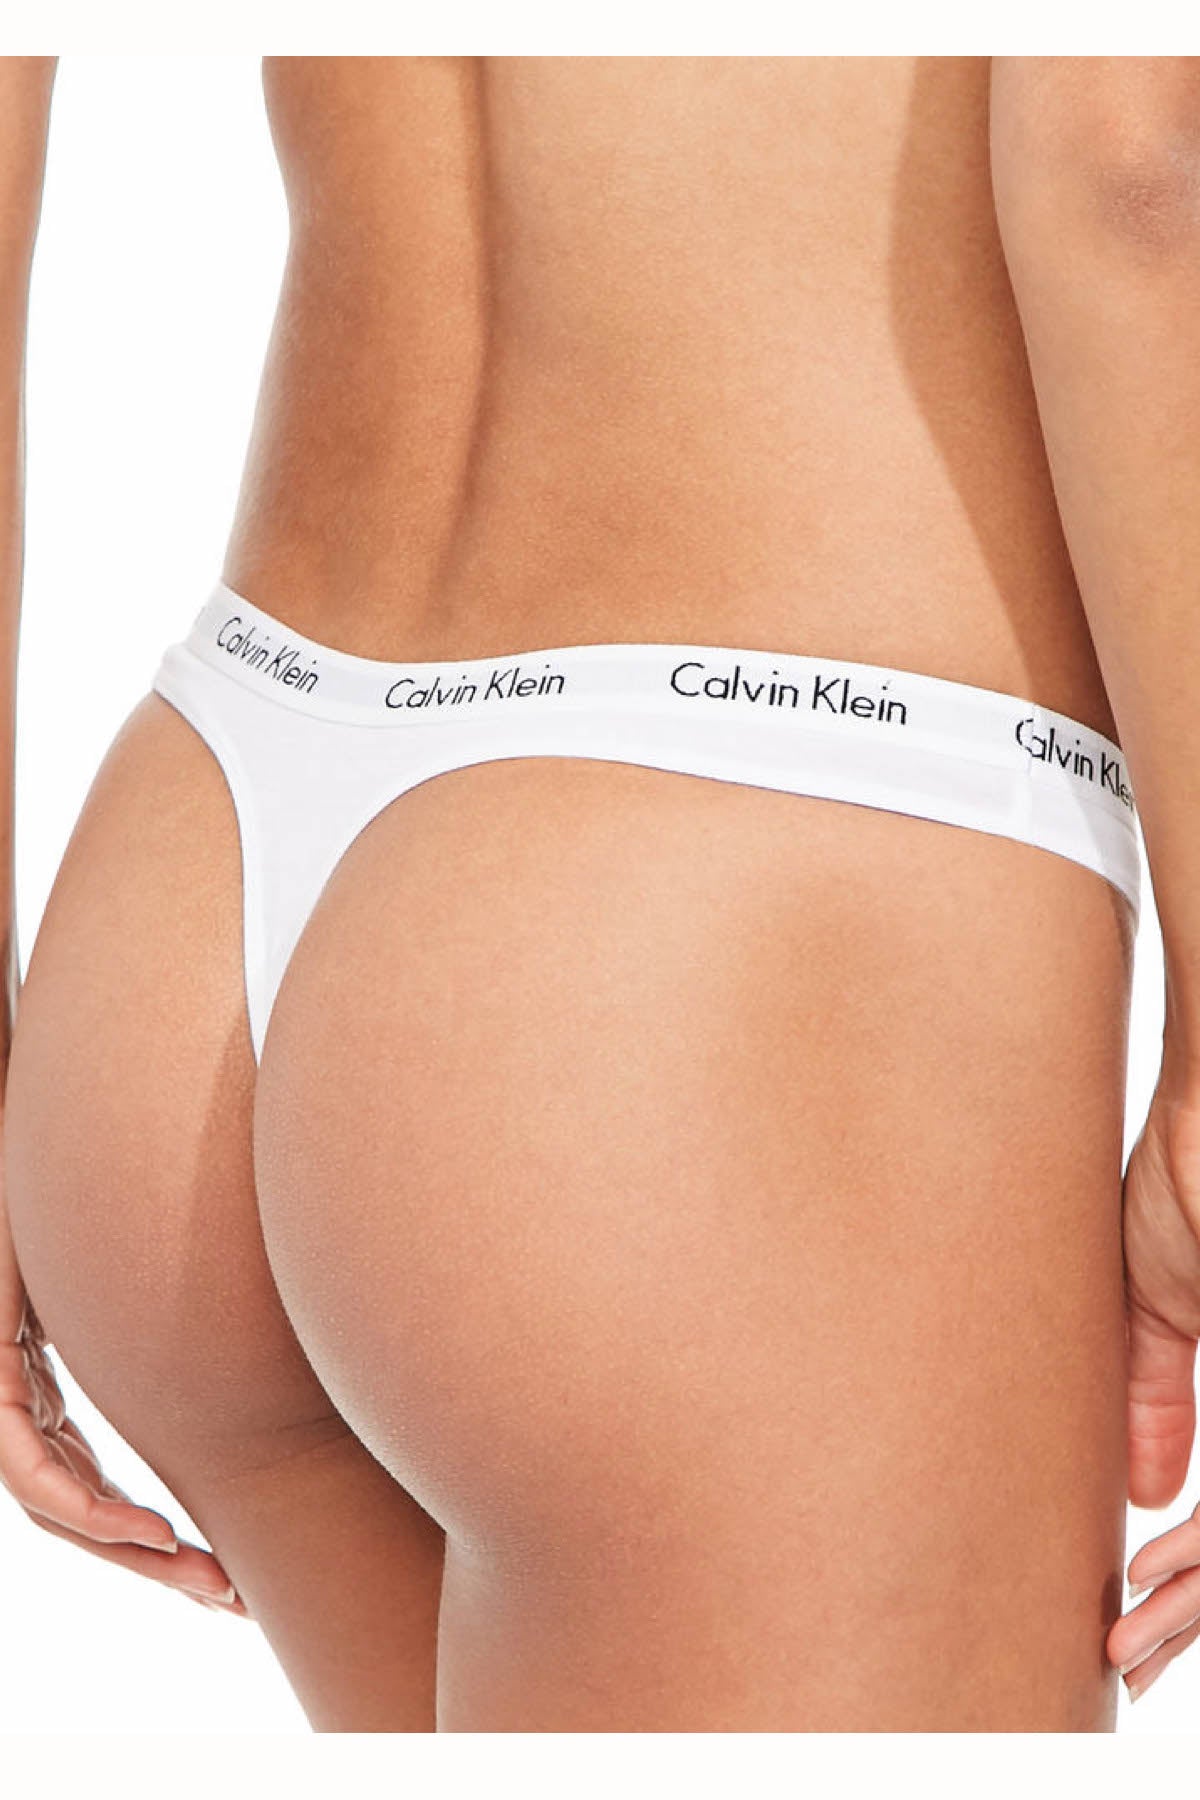 Calvin Klein White Carousel Thong